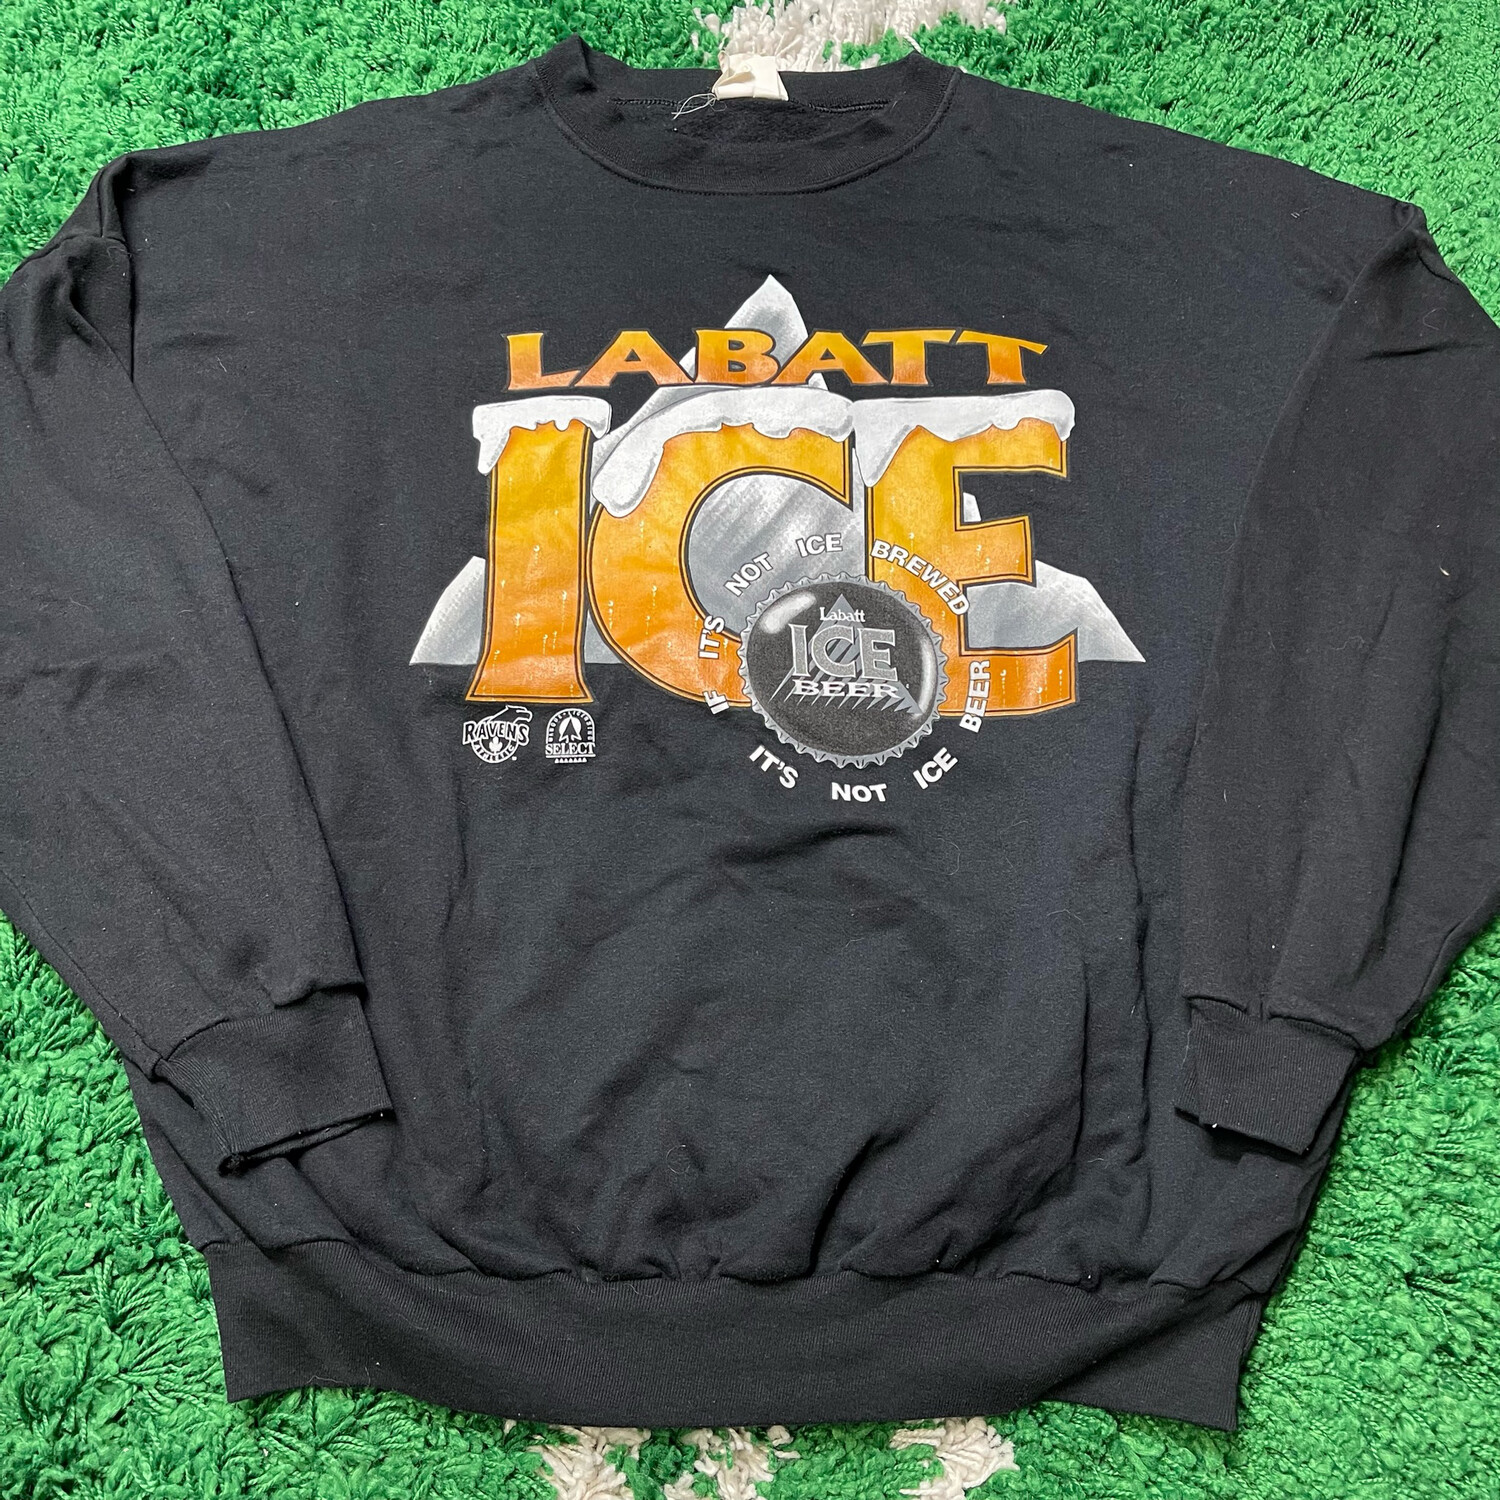 Labatt Ice Crewneck Sweater Size Large